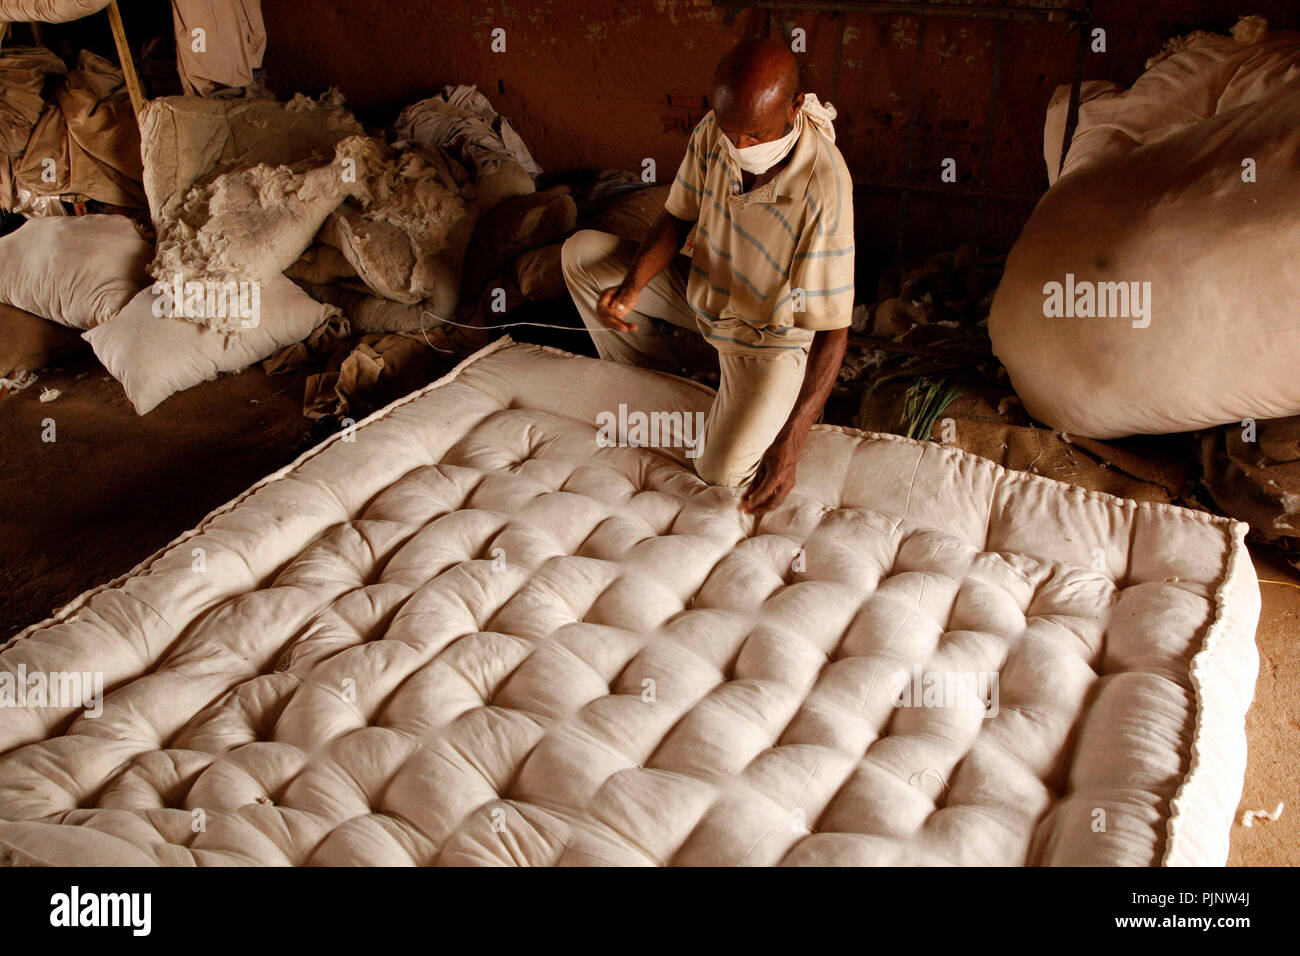 Omdurman, Sudan. 8th Sep, 2018. A worker makes cotton bed mattresses in Omdurman, Sudan, Sept. 8, 2018. Credit: Mohamed Khidir/Xinhua/Alamy Live News Stock Photo